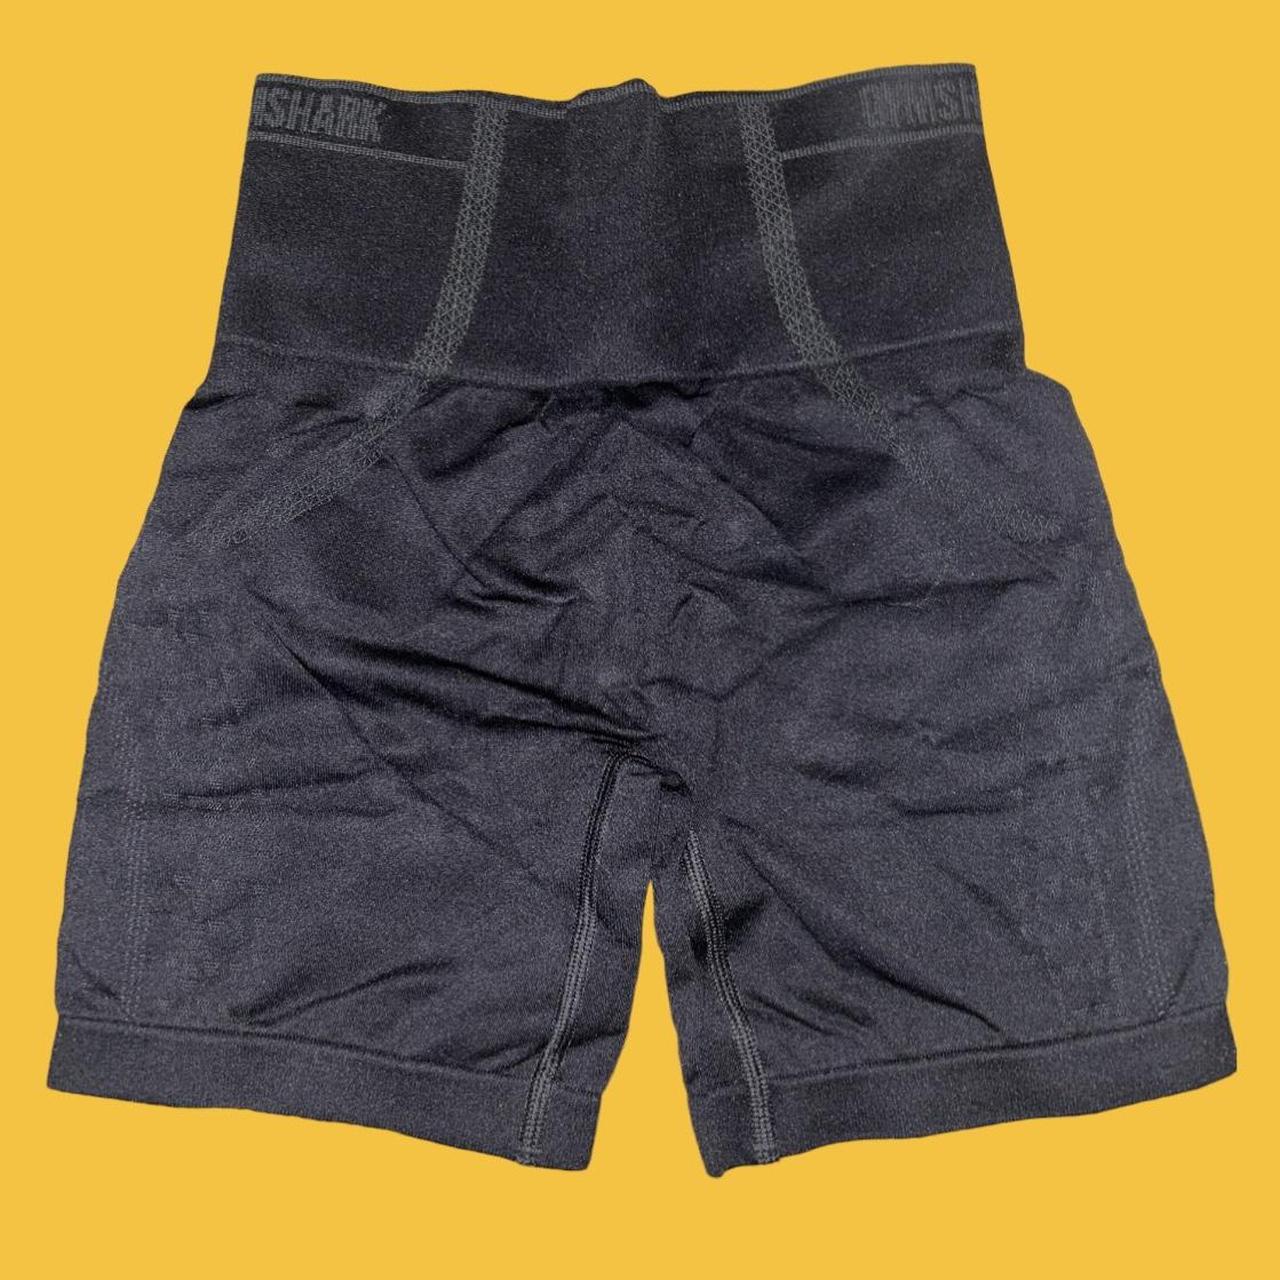 Gymshark Apex Seamless shorts. Size Medium in purple.